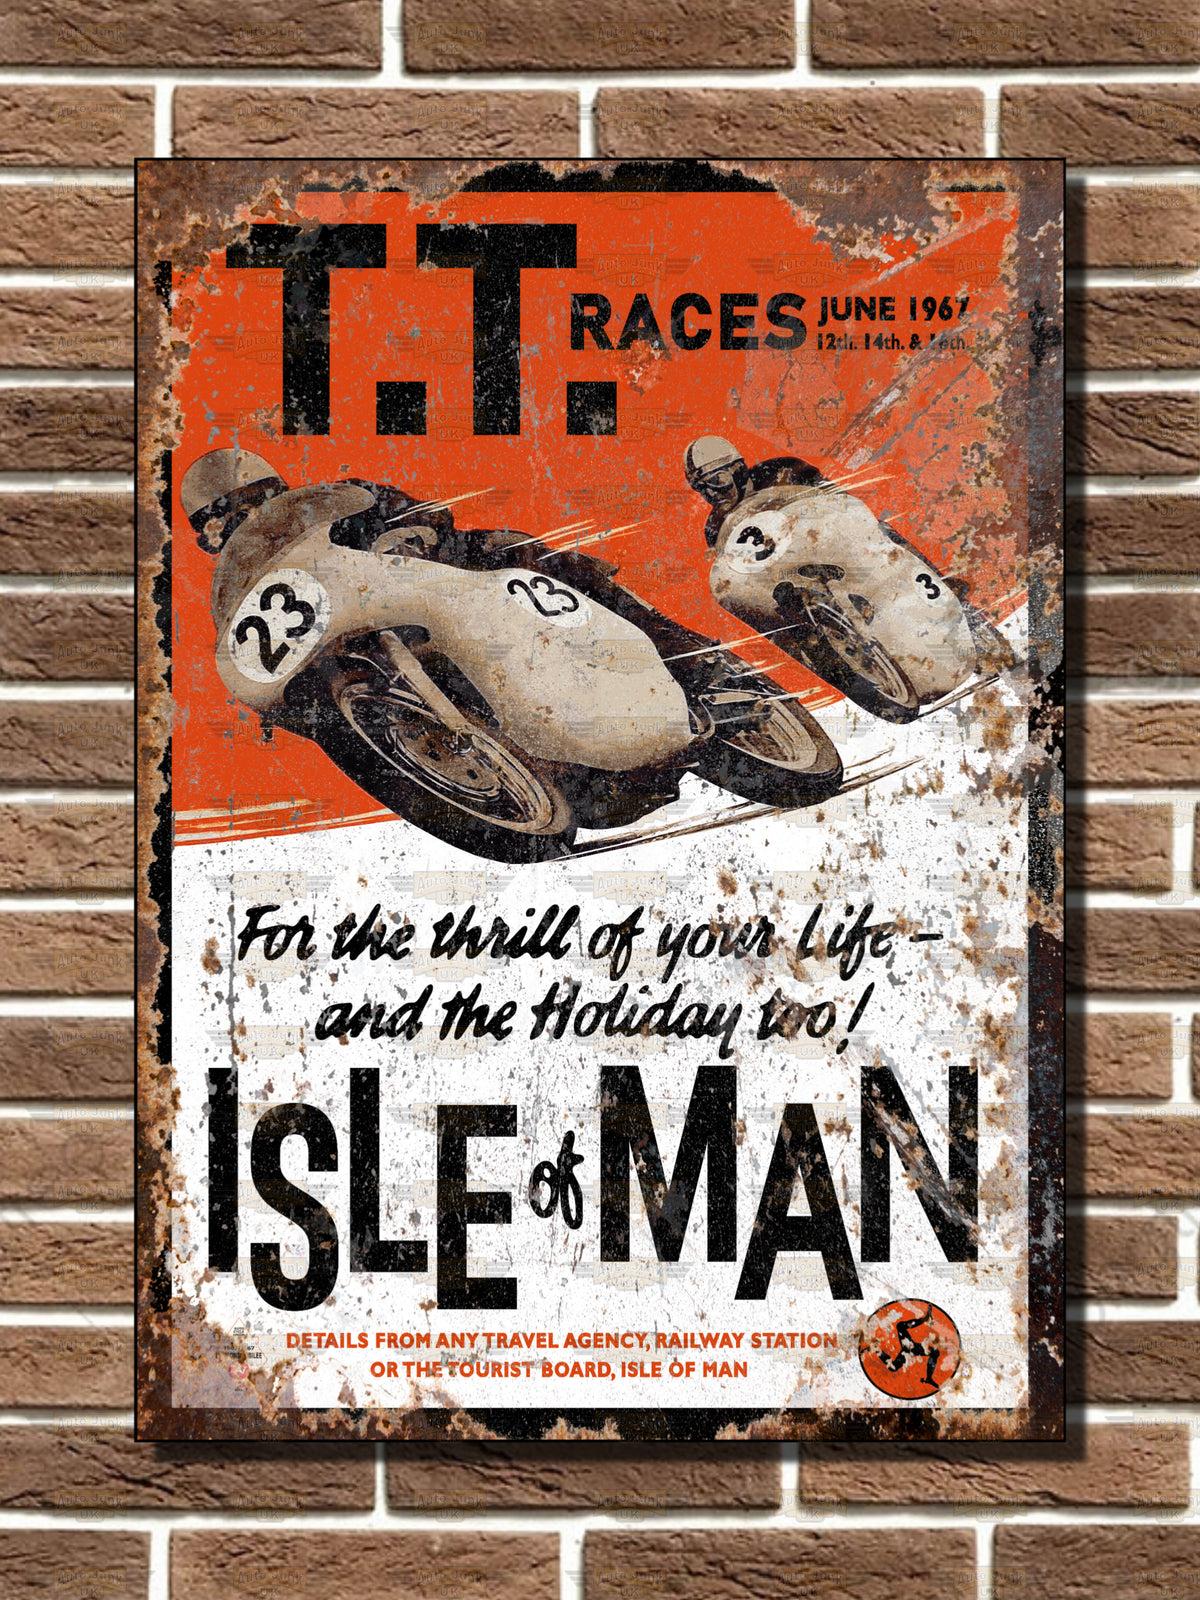 Isle of Man TT Races Metal Sign